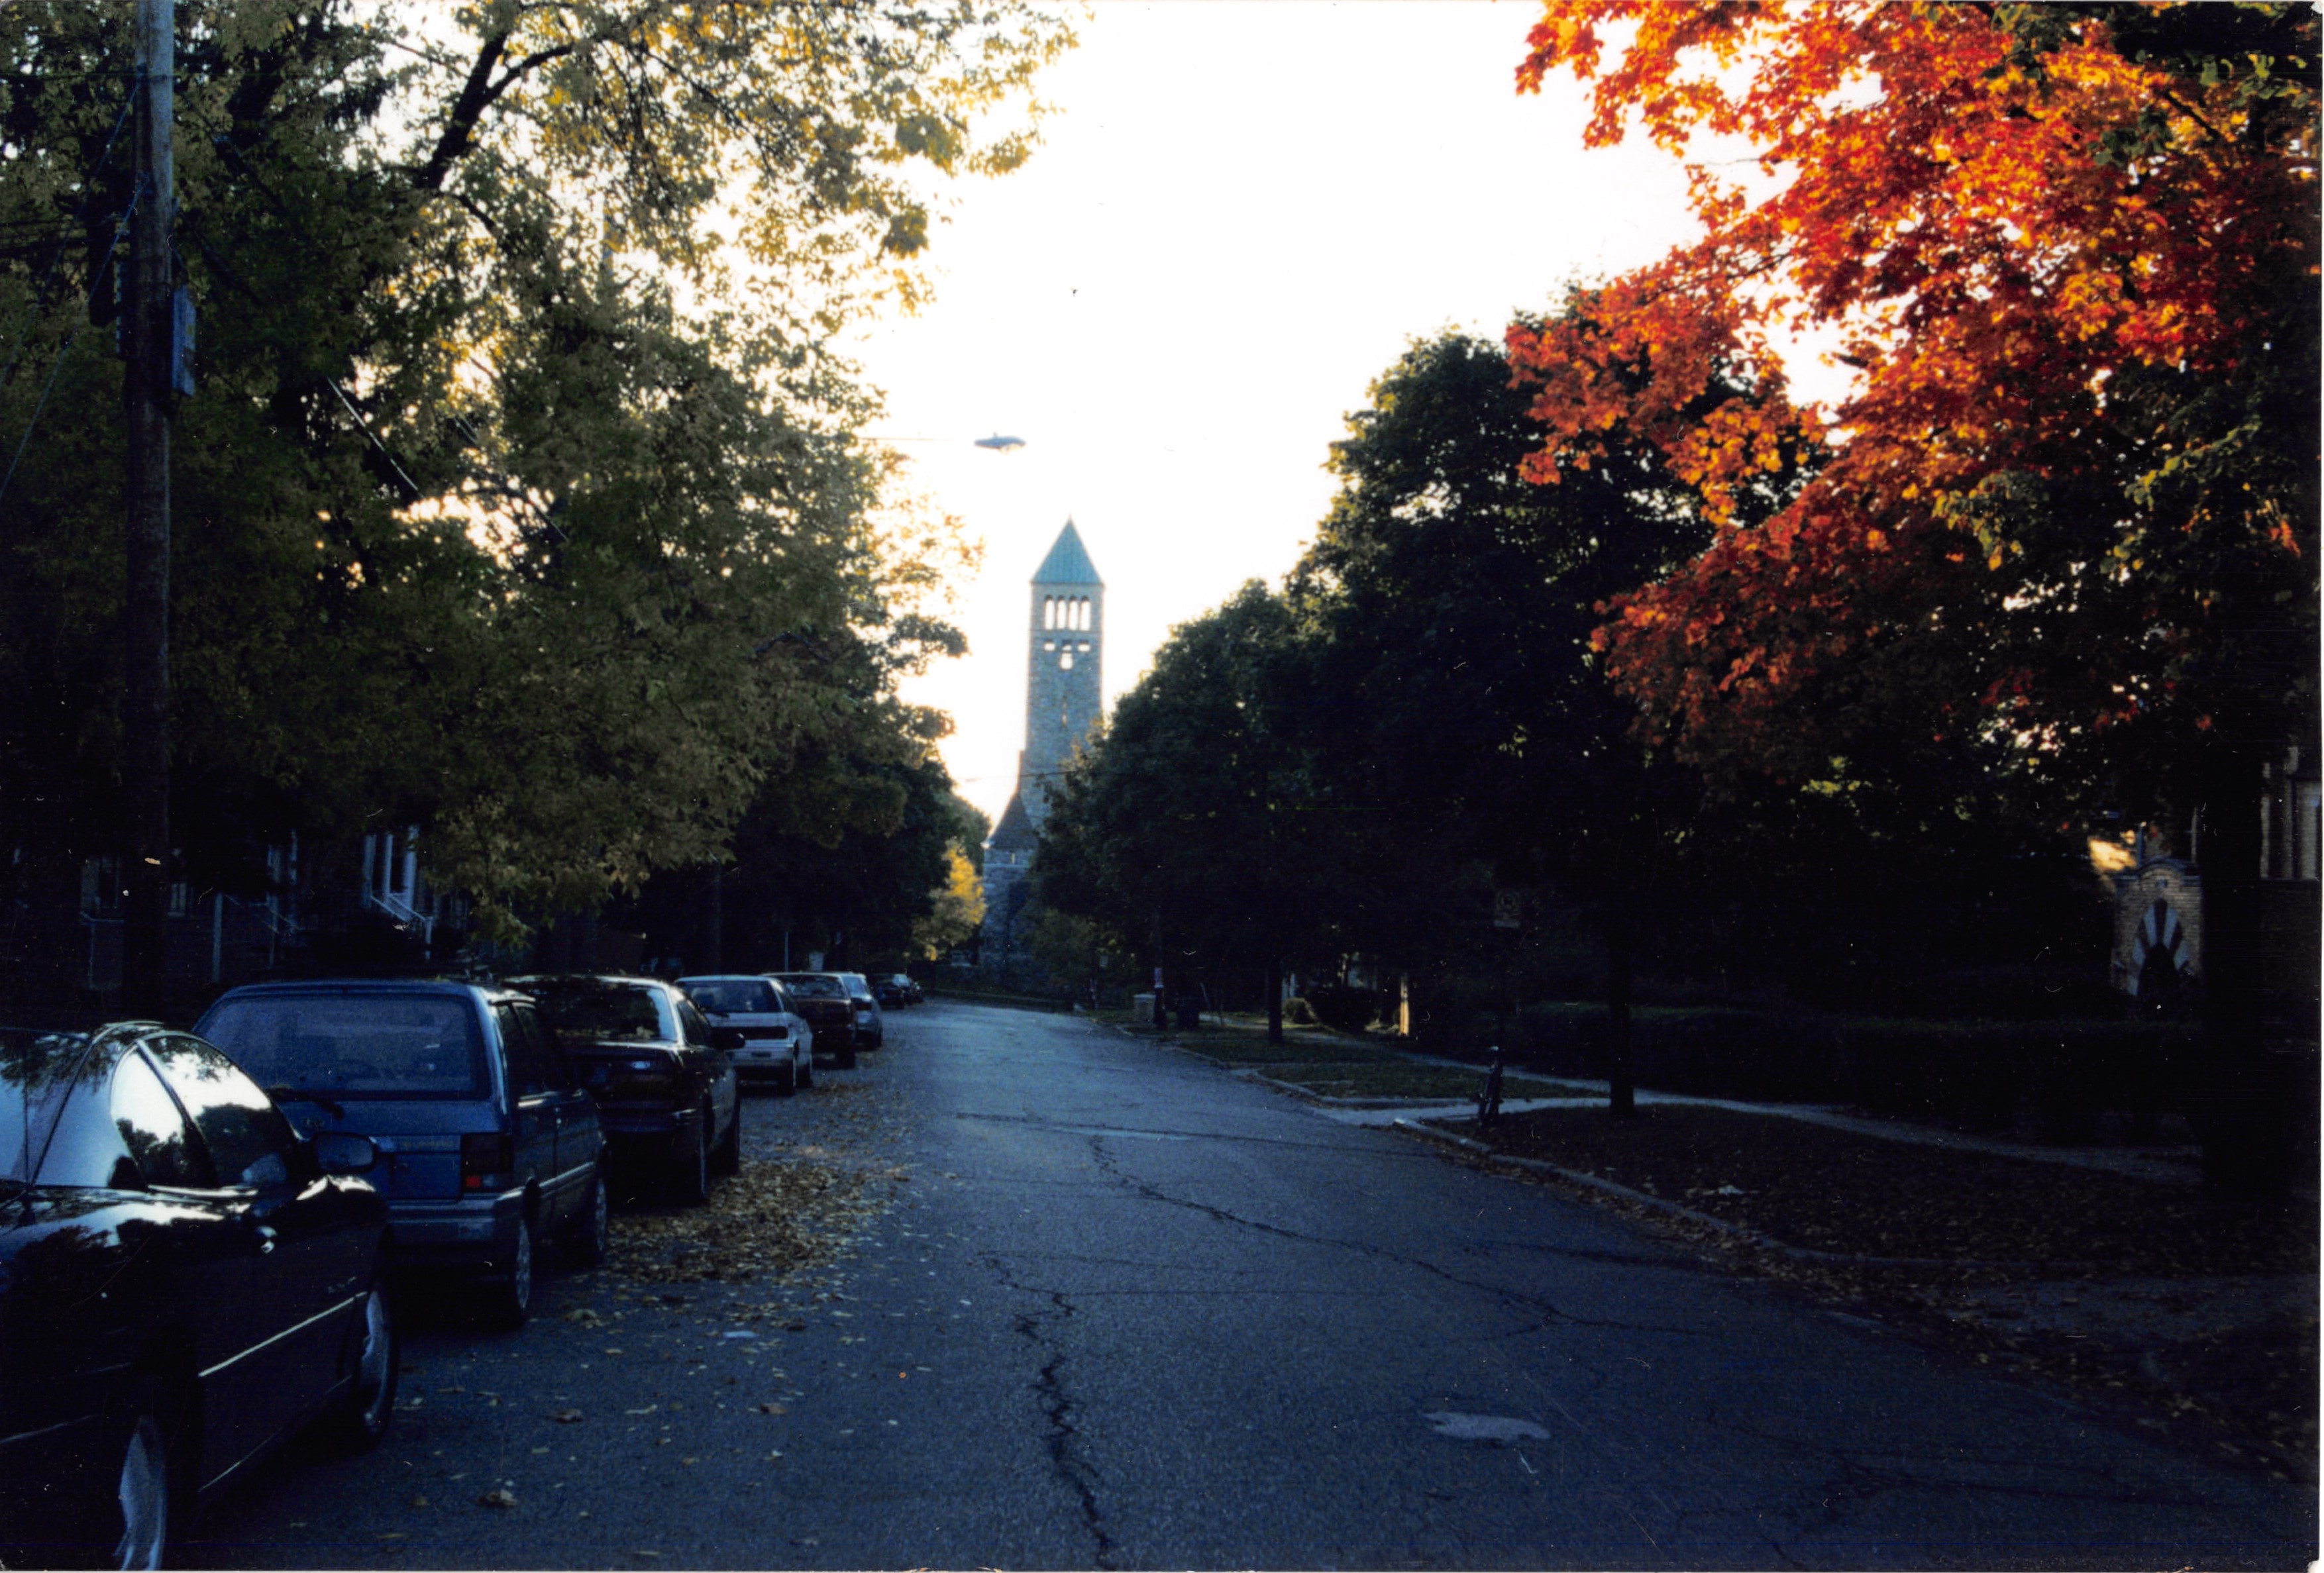 The University of Michigan - Ann Arbor